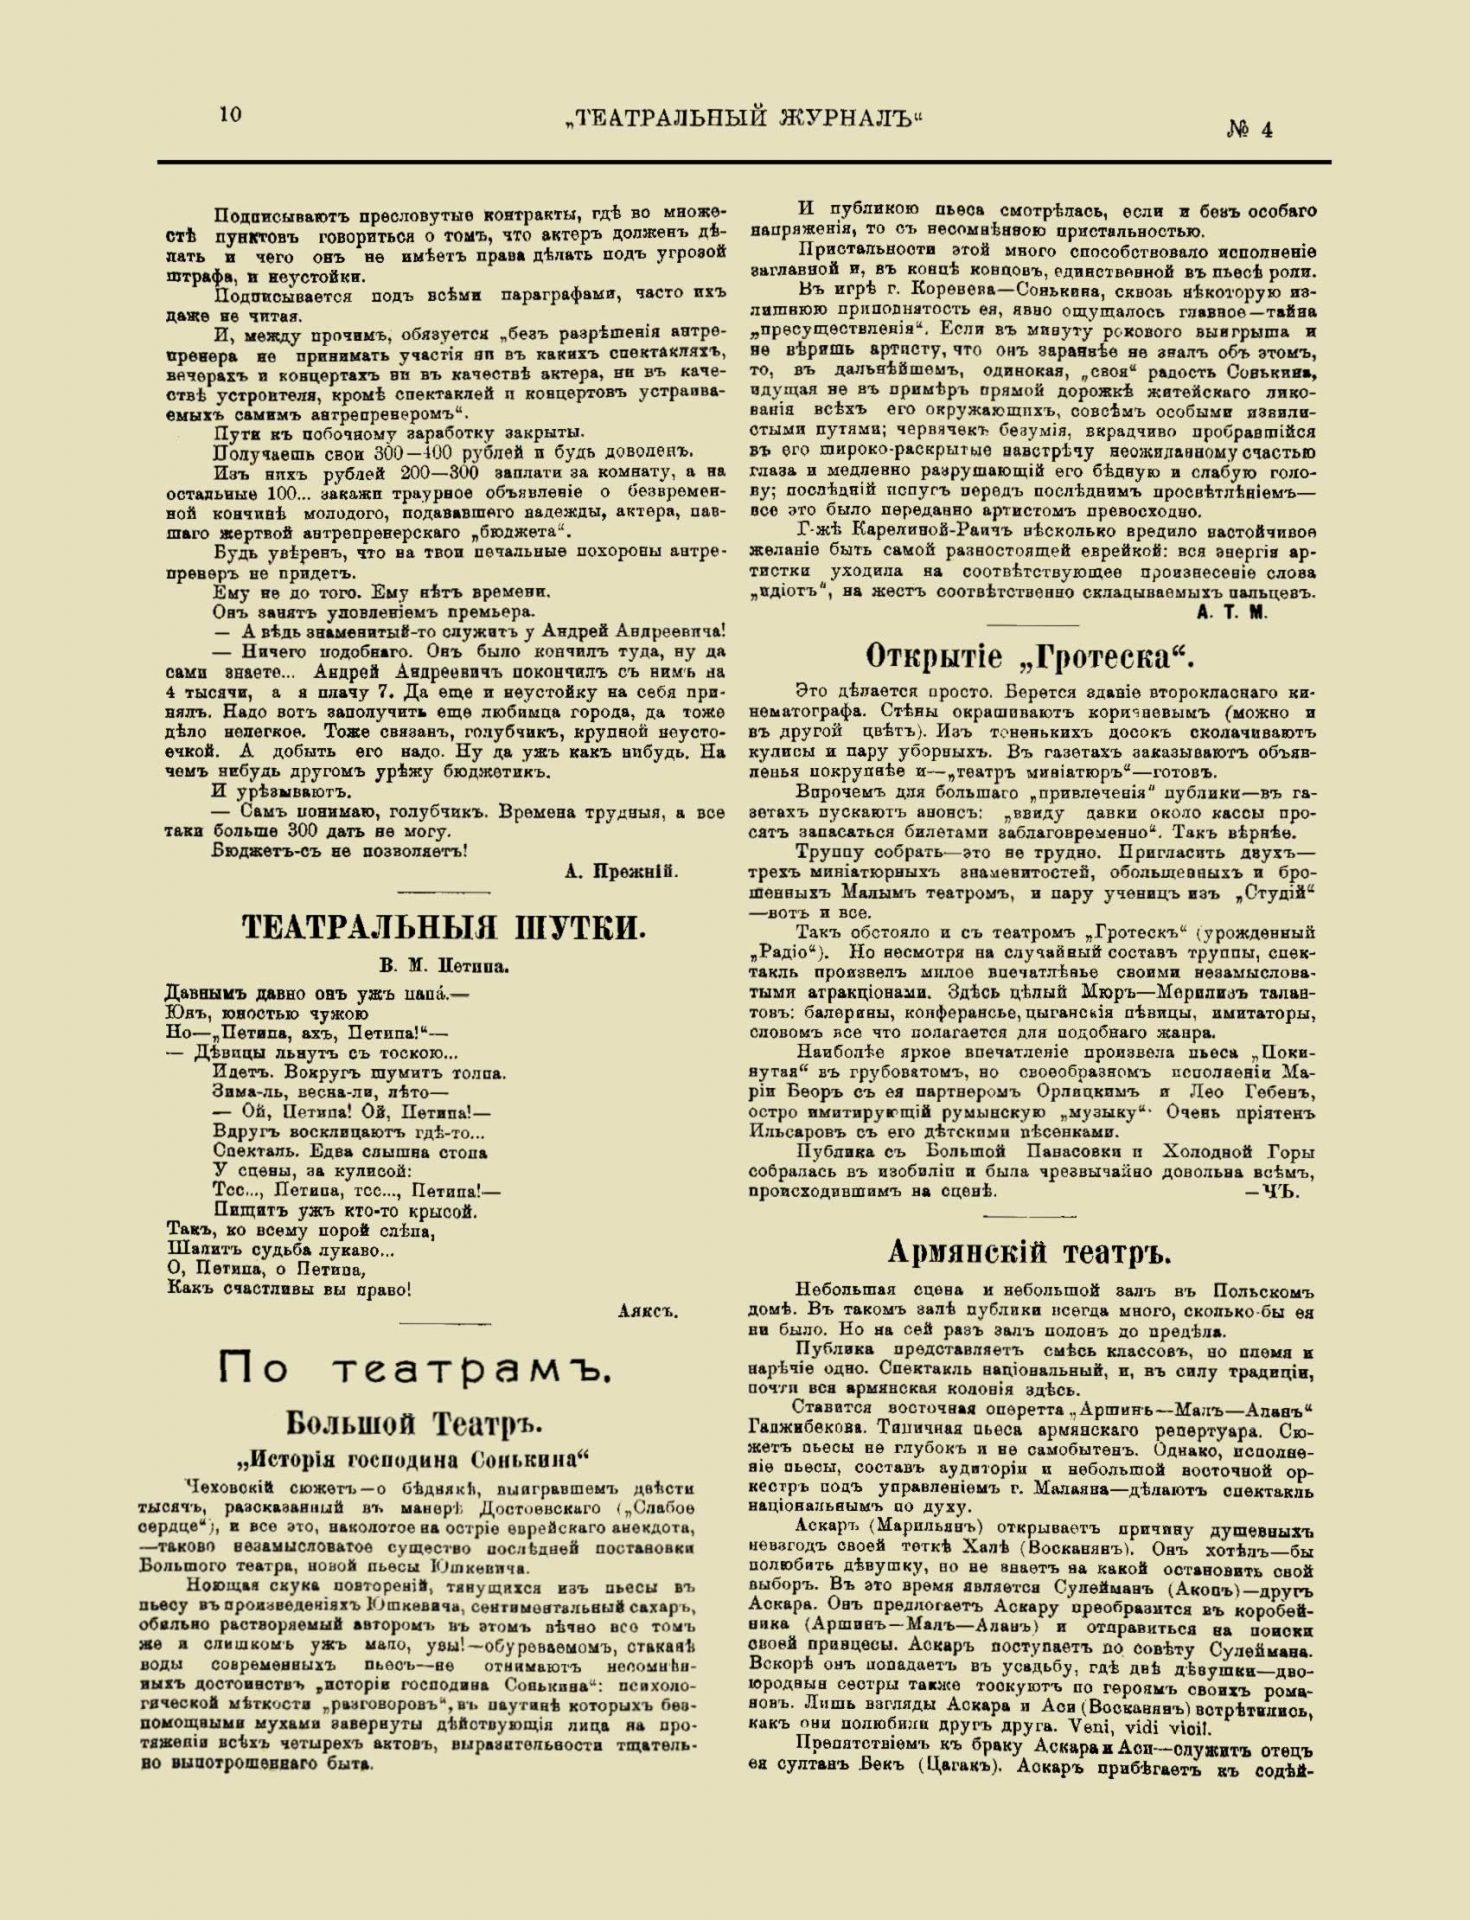 Театральный журнал_1918_№4